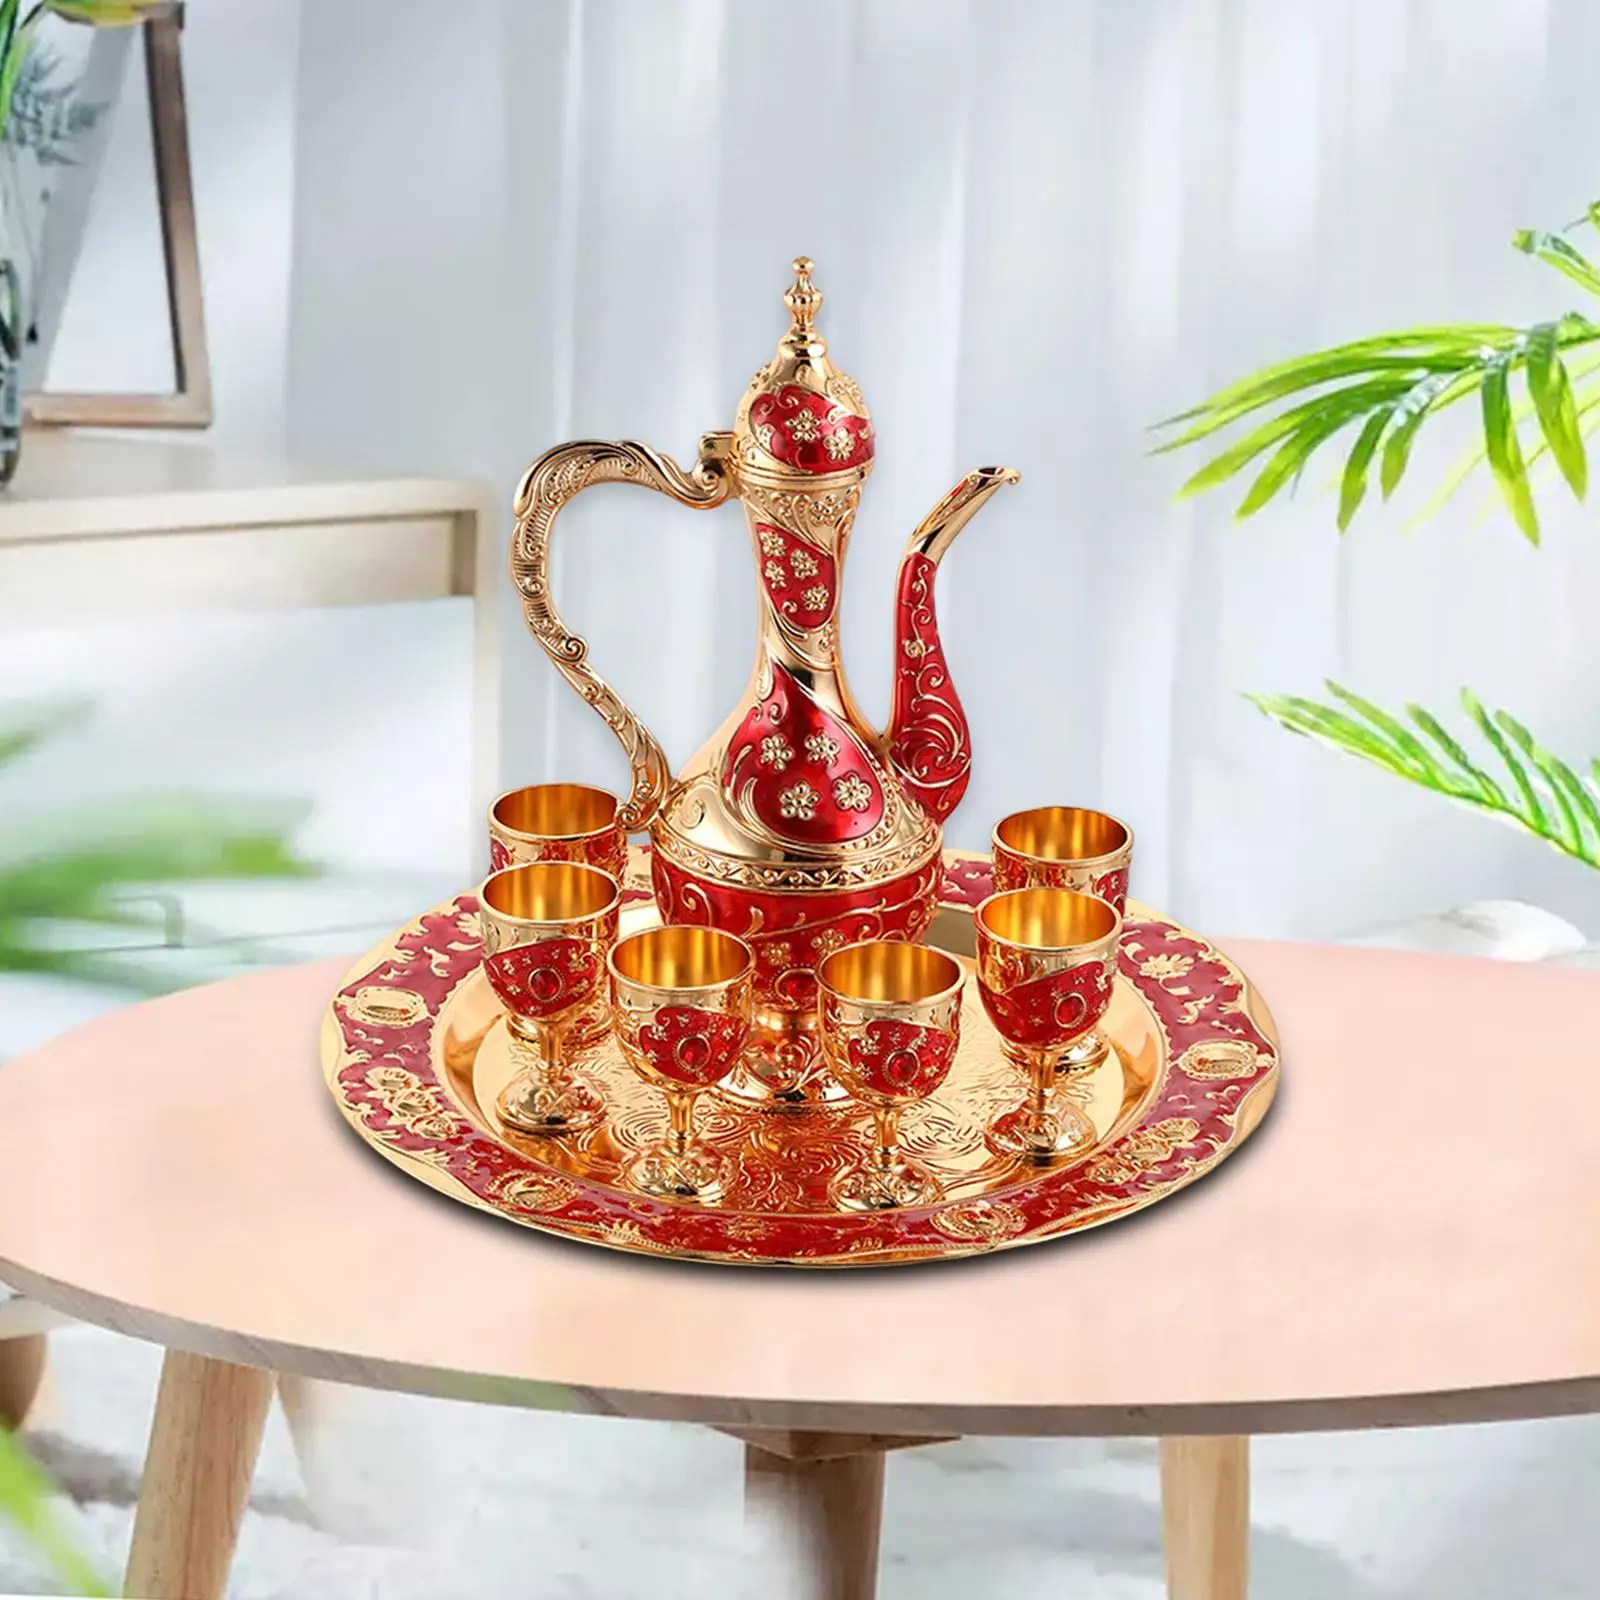 Luxury Tea Pot Set with Drinking Cups Beverage Serveware Tea Serving Set for Dining Room Holiday Bedroom Wedding Decoration